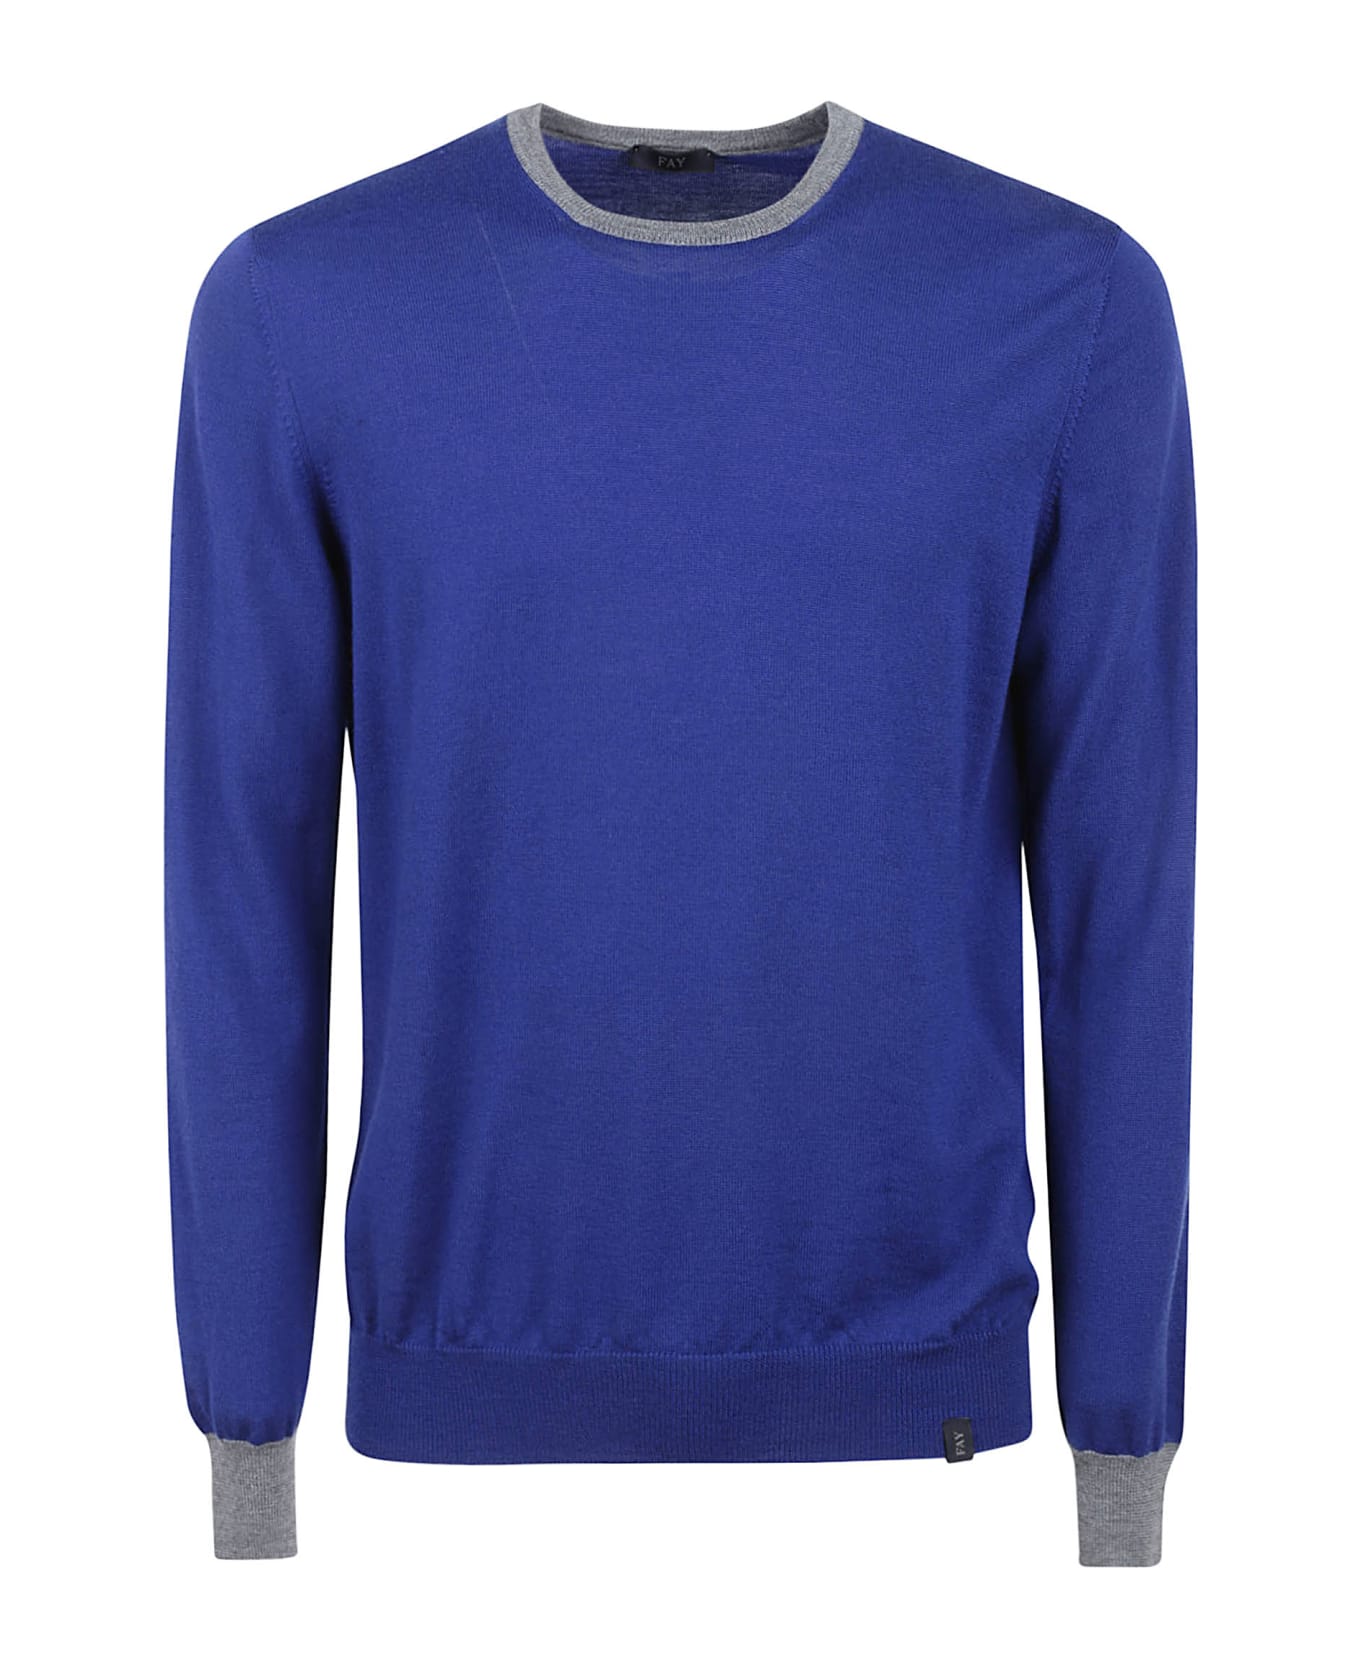 Fay Padded Shoulder Rib Trim Sweater - Royal Blue